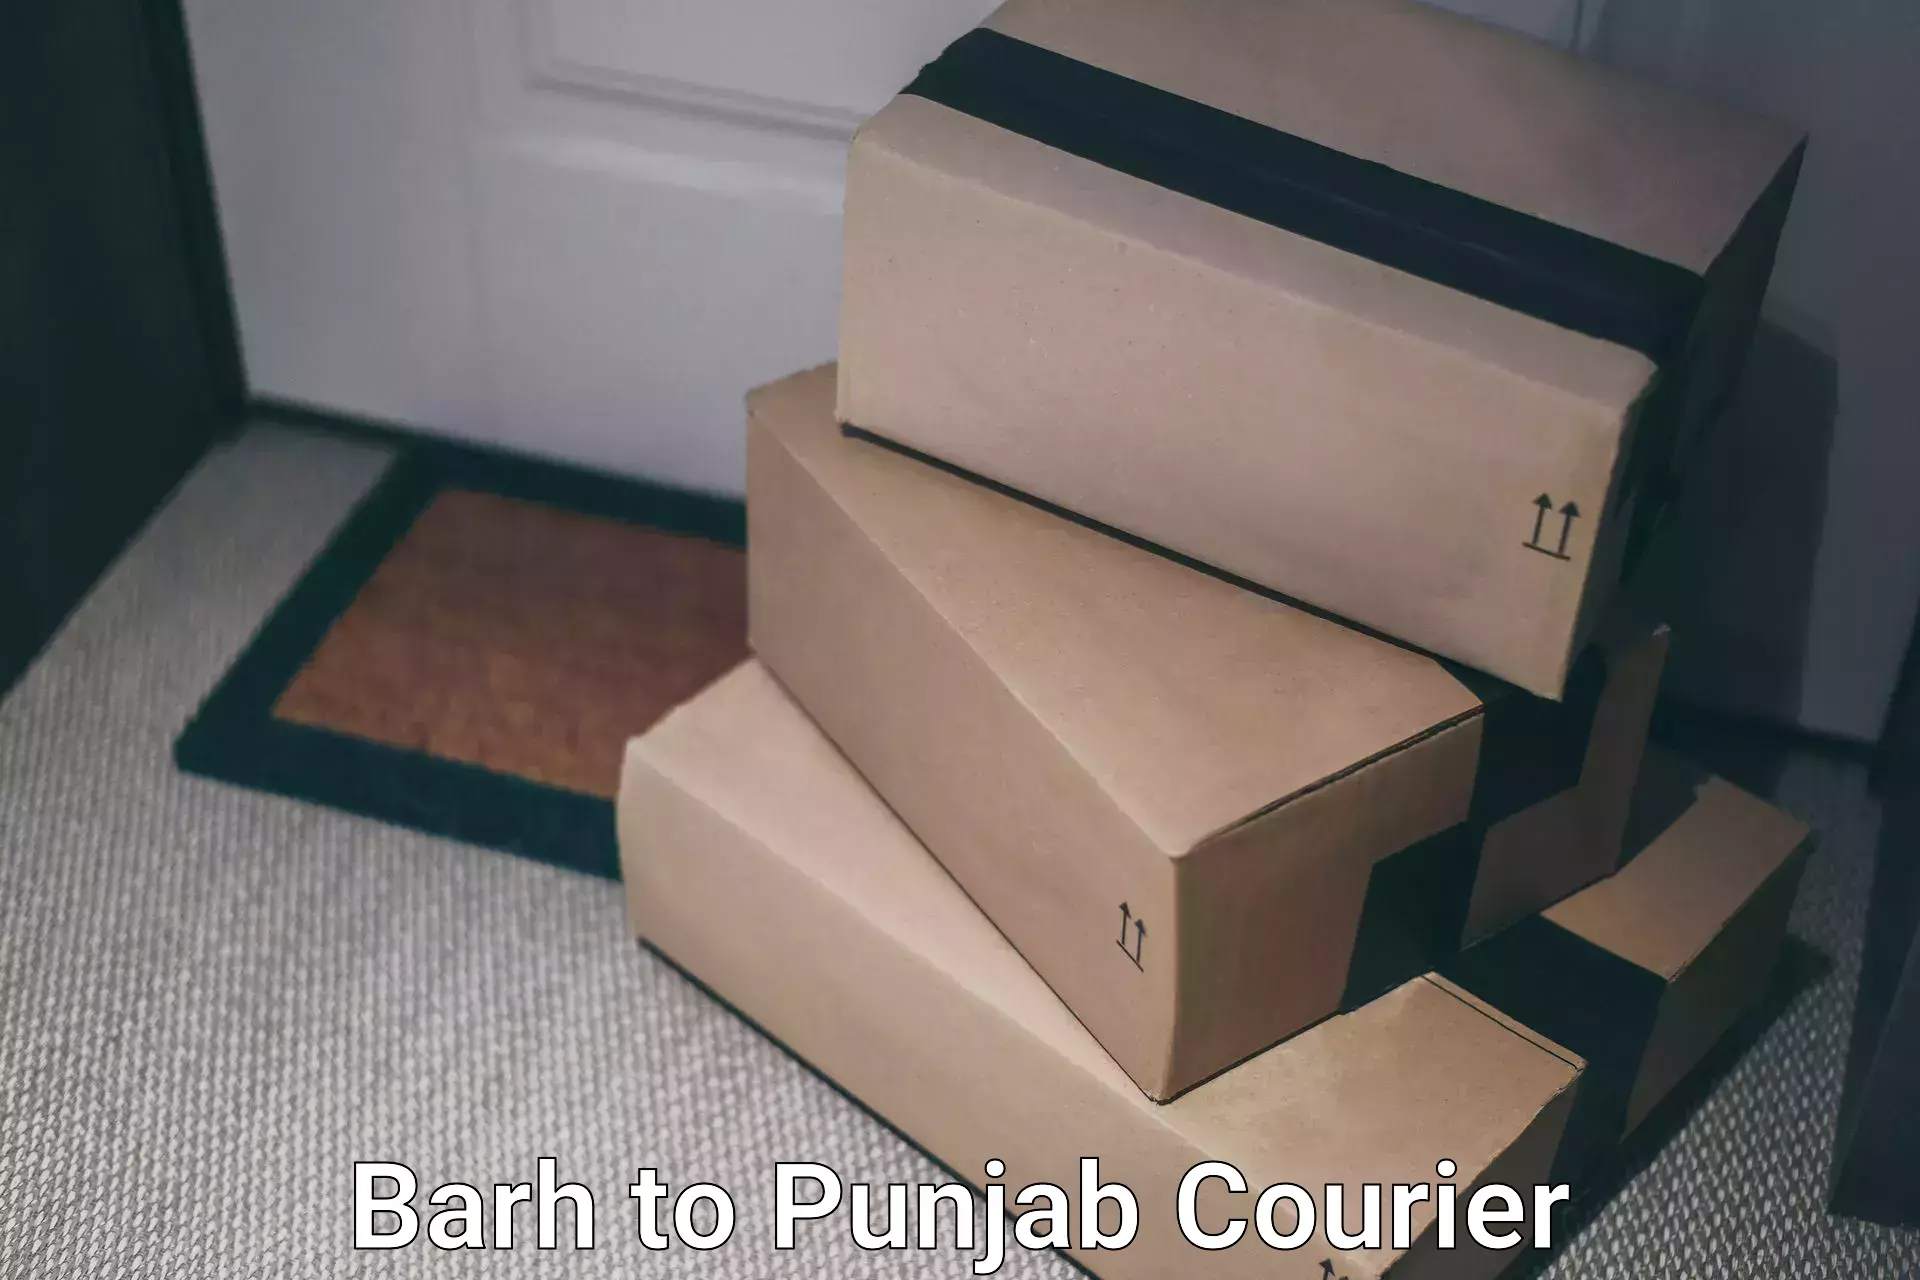 Specialized shipment handling Barh to Punjab